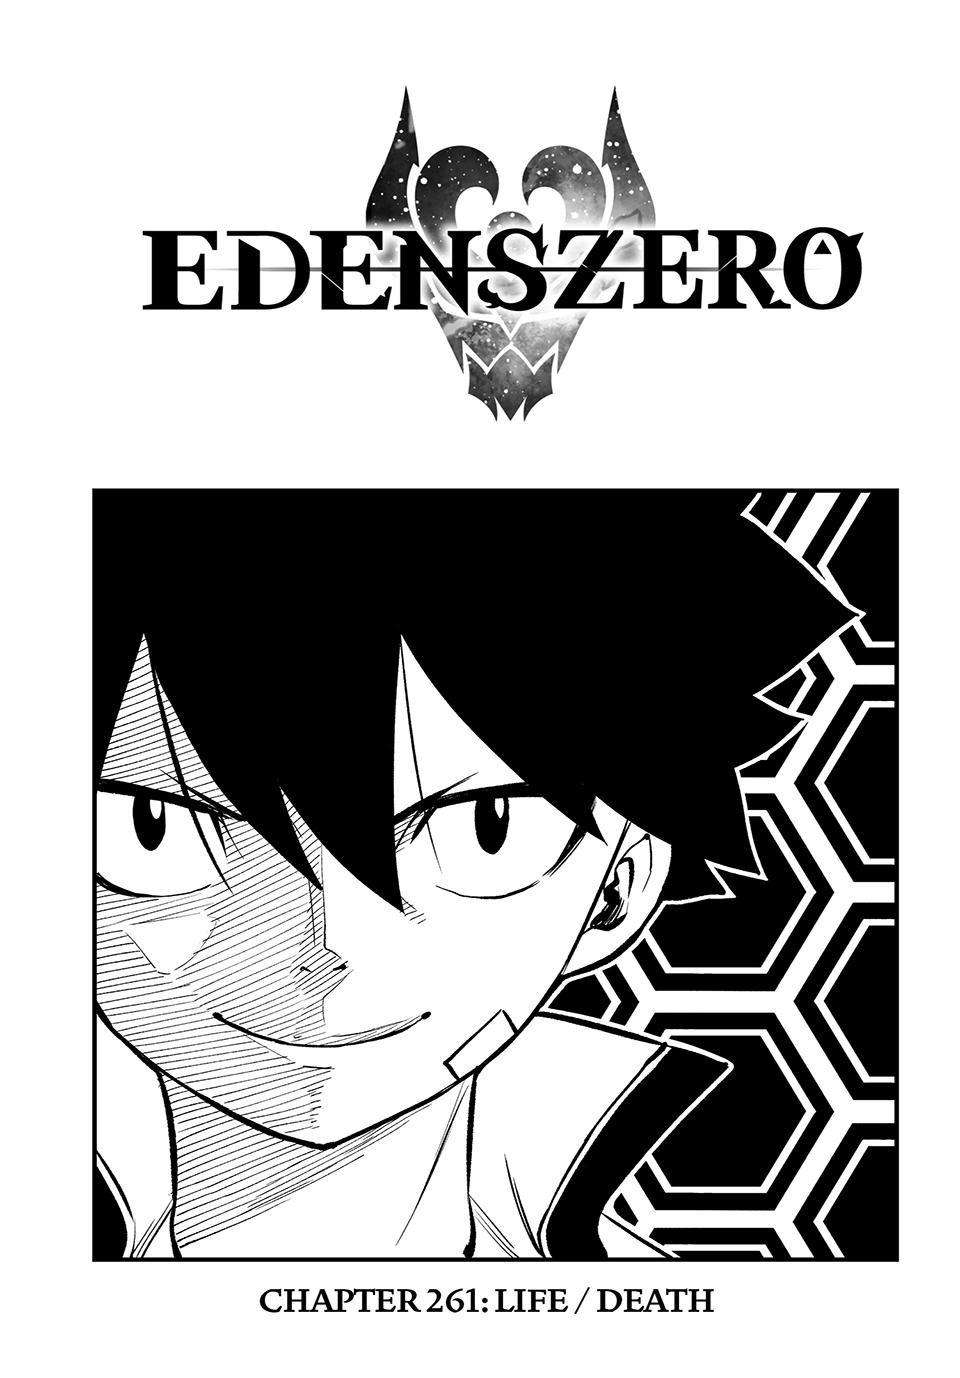 Edens Zero Chapter 232 - Edens Zero Manga